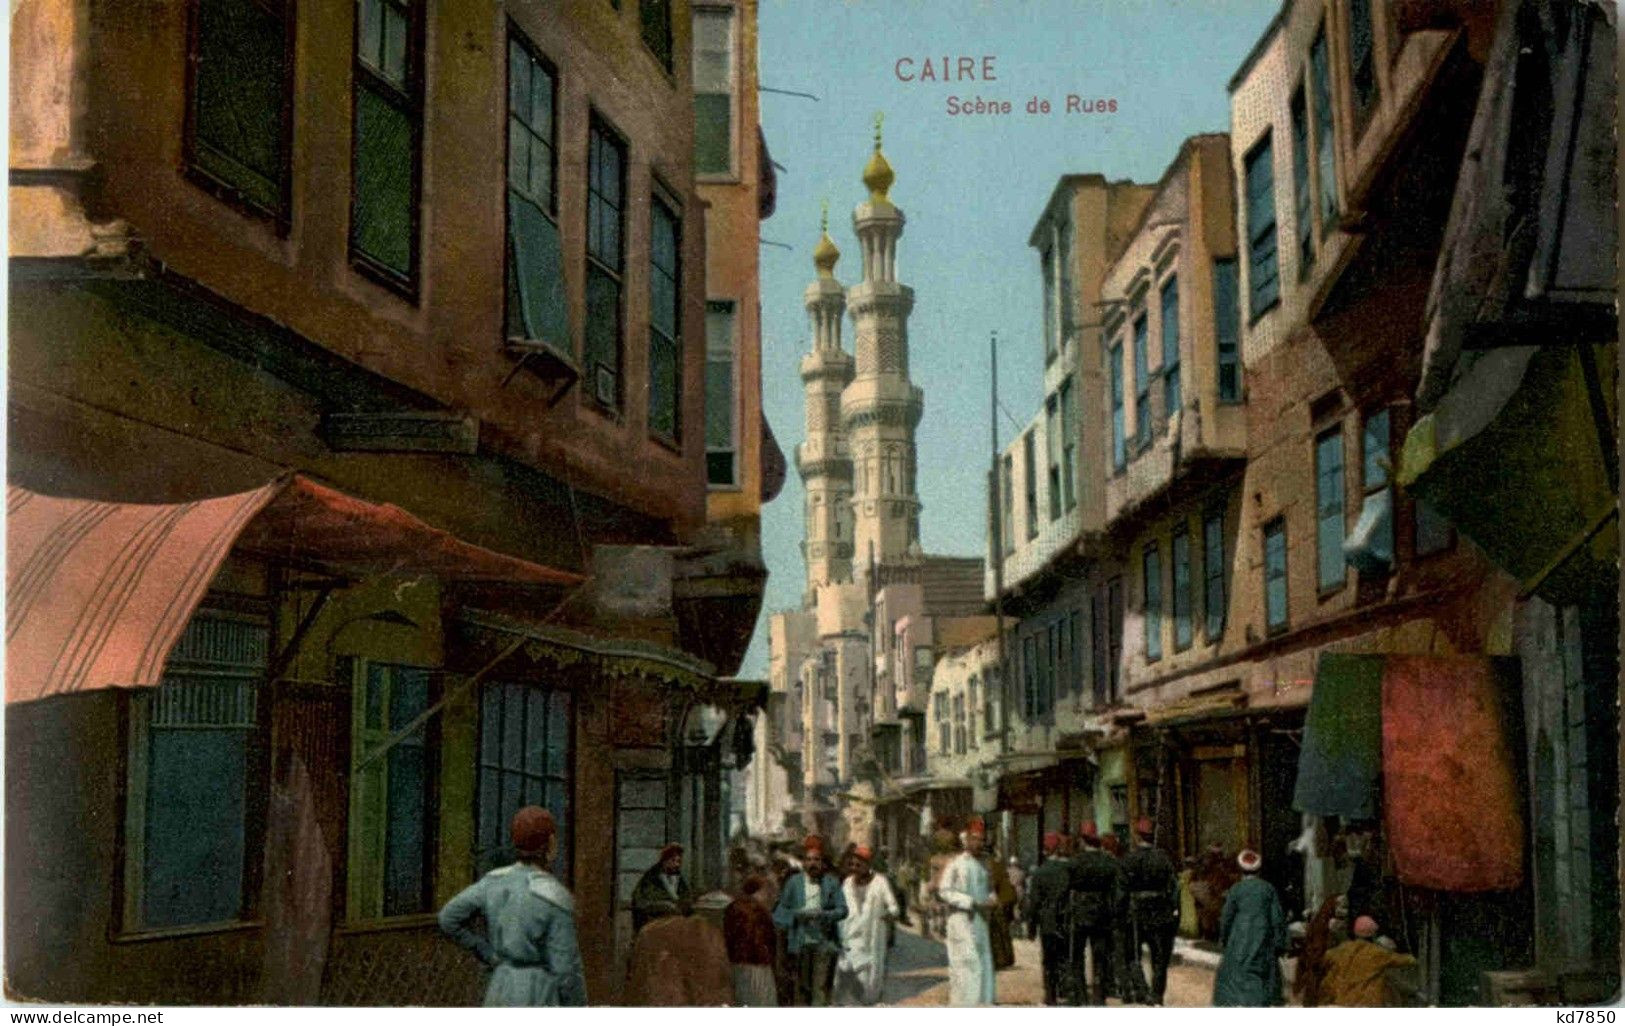 Cairo - Scene De Rues - Le Caire